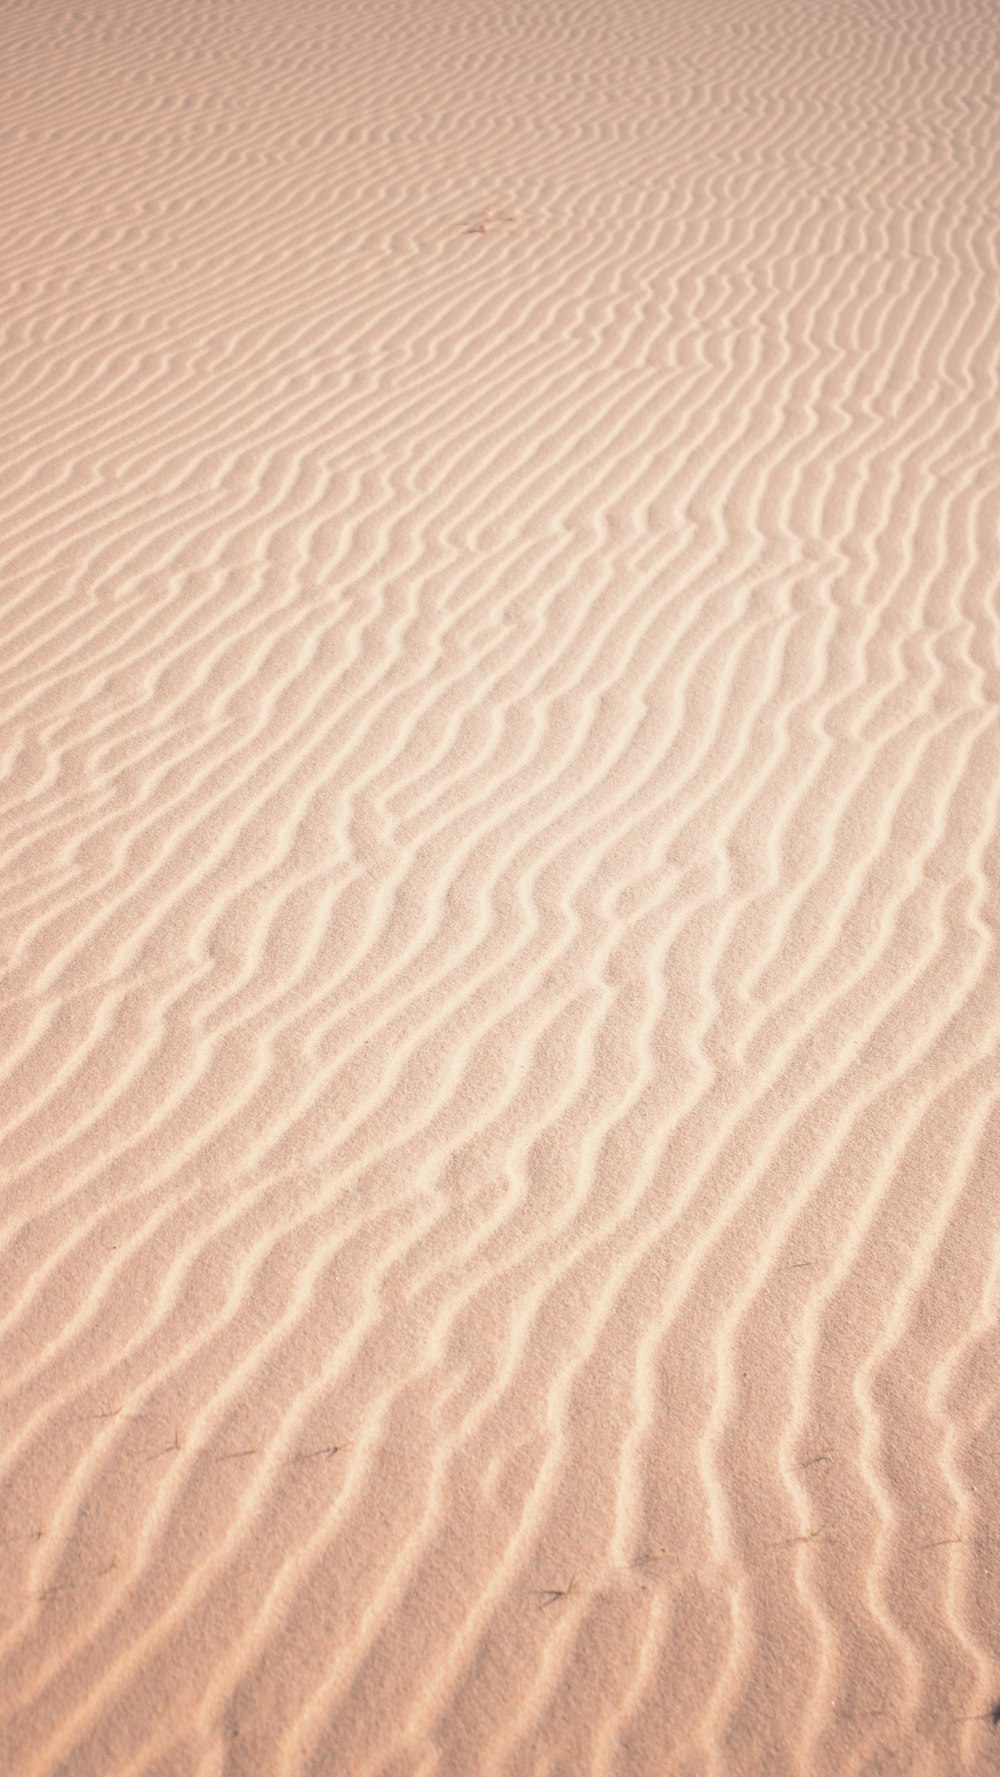 Arena marrón con arena blanca